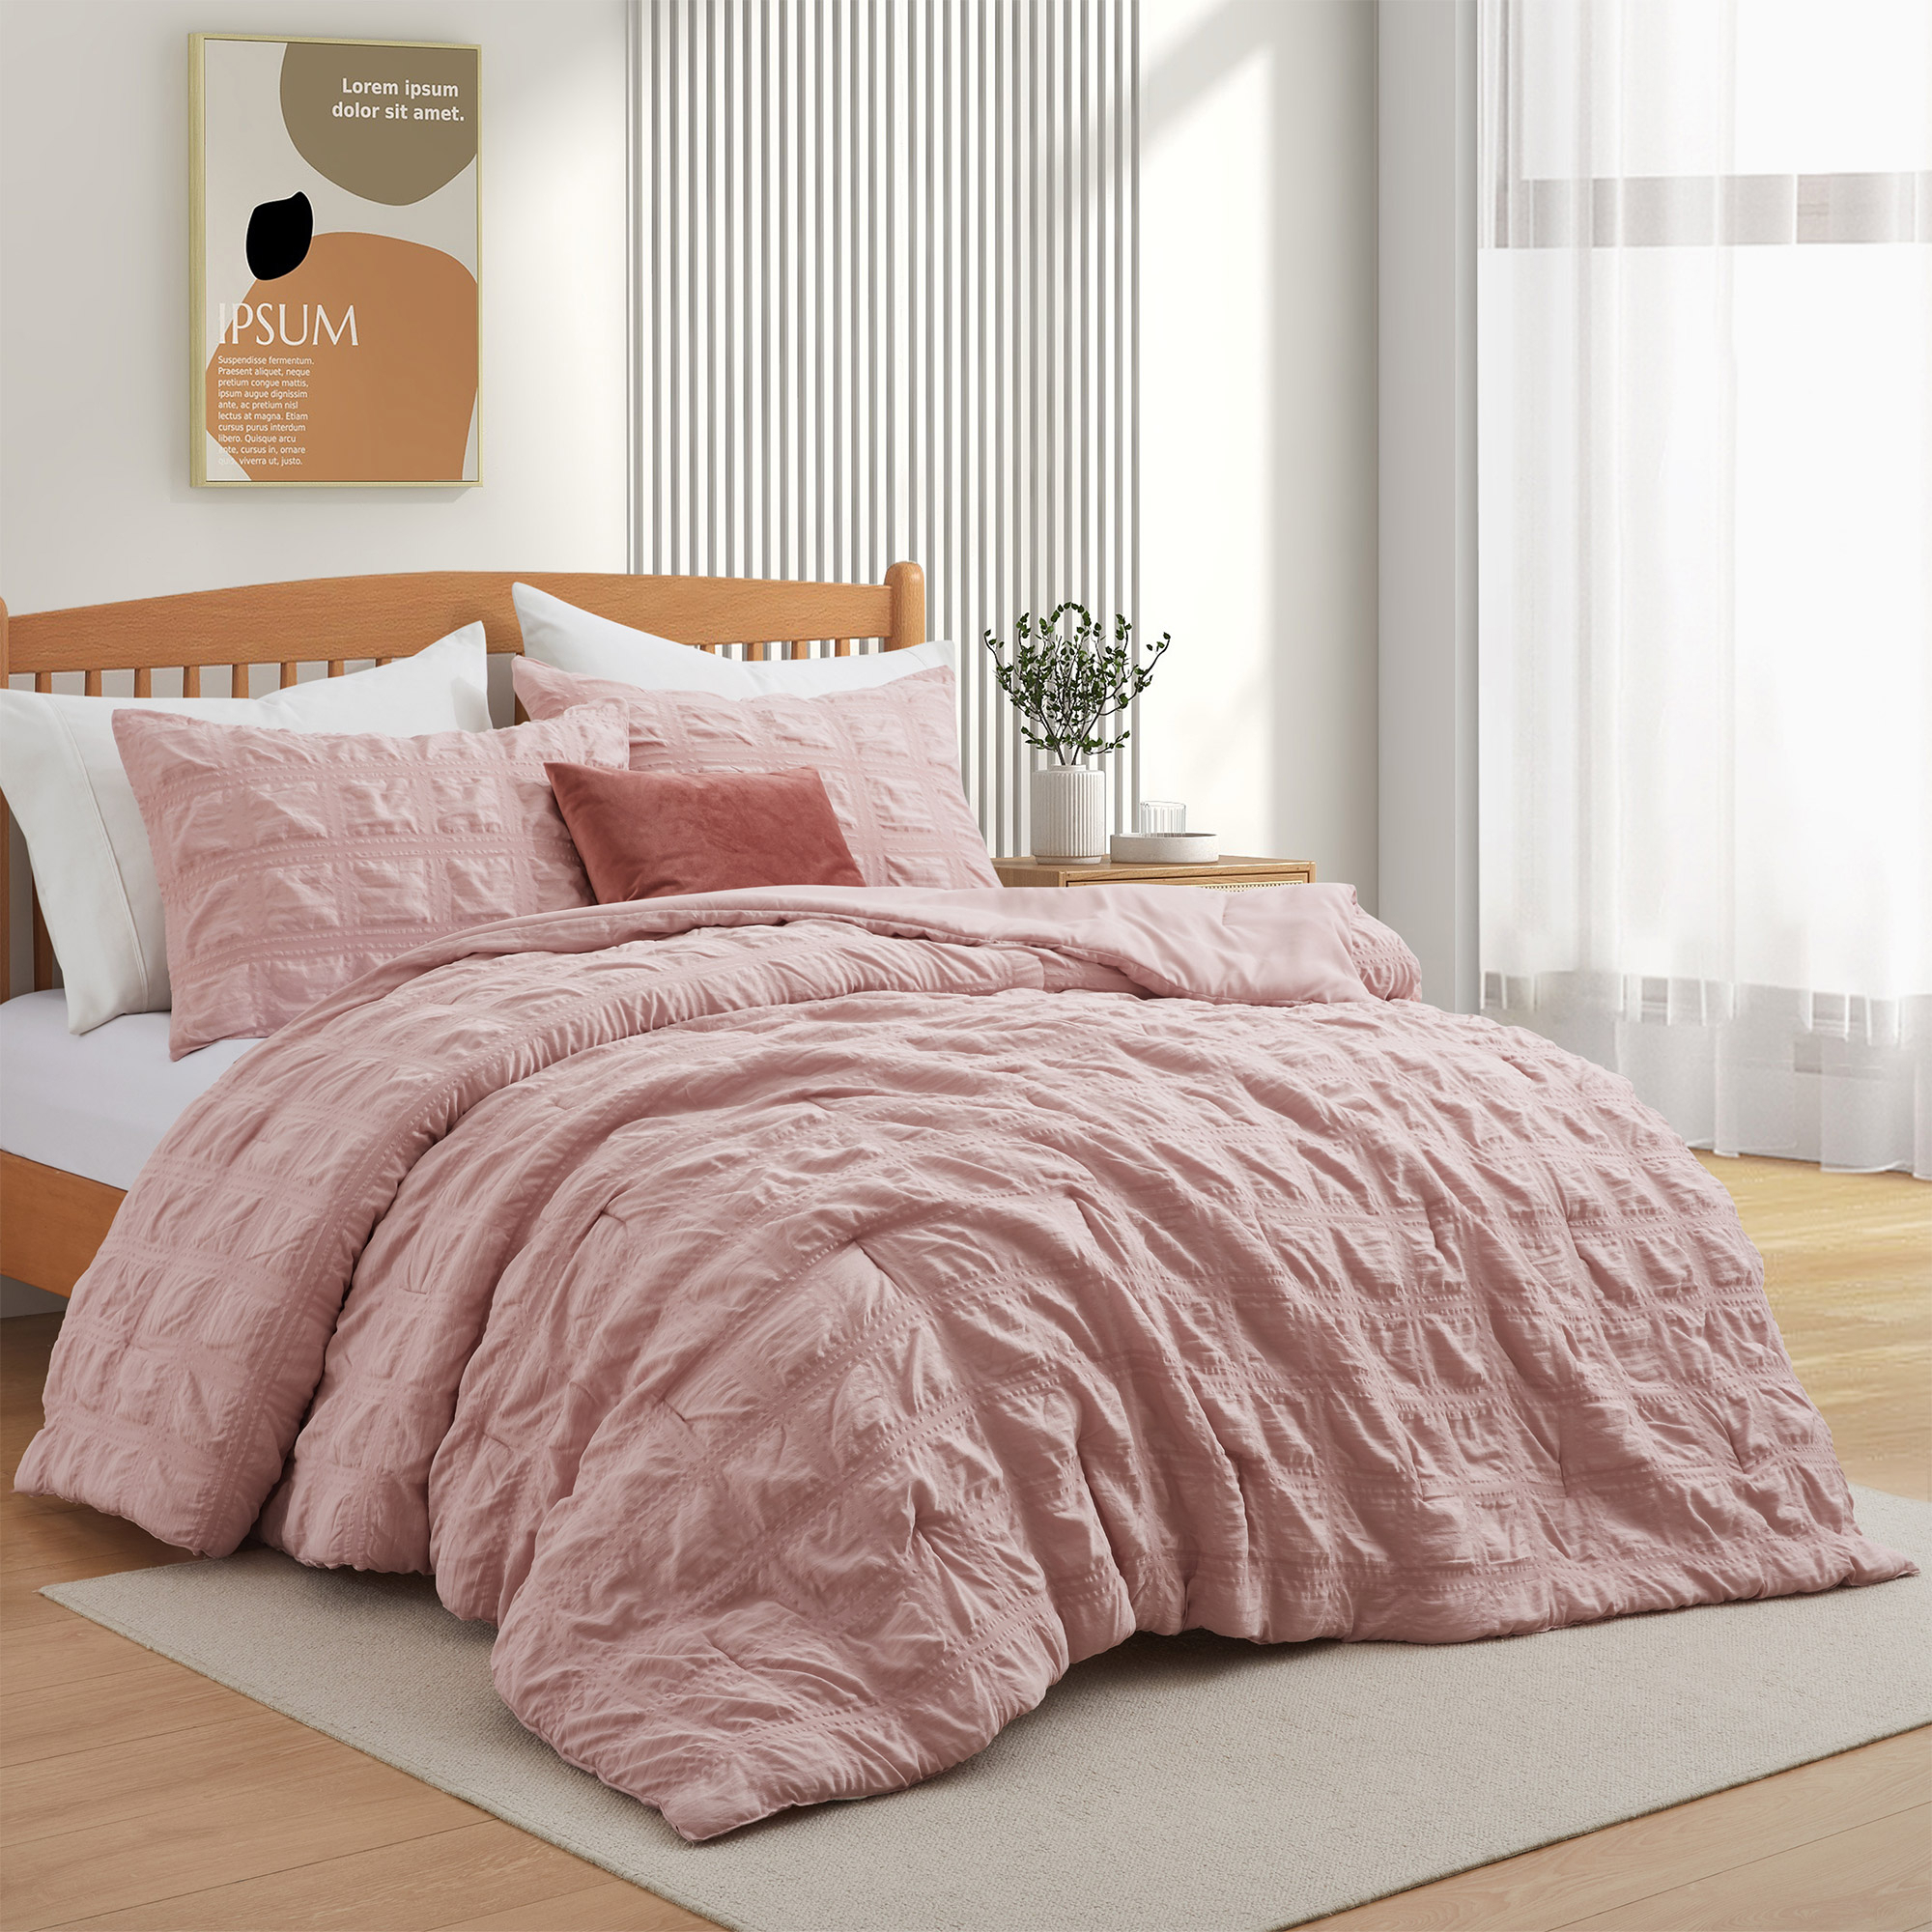 All Season Crinkle Textured Down Alternative Comforter Set-Seersucker Bedding Set - Pink, King